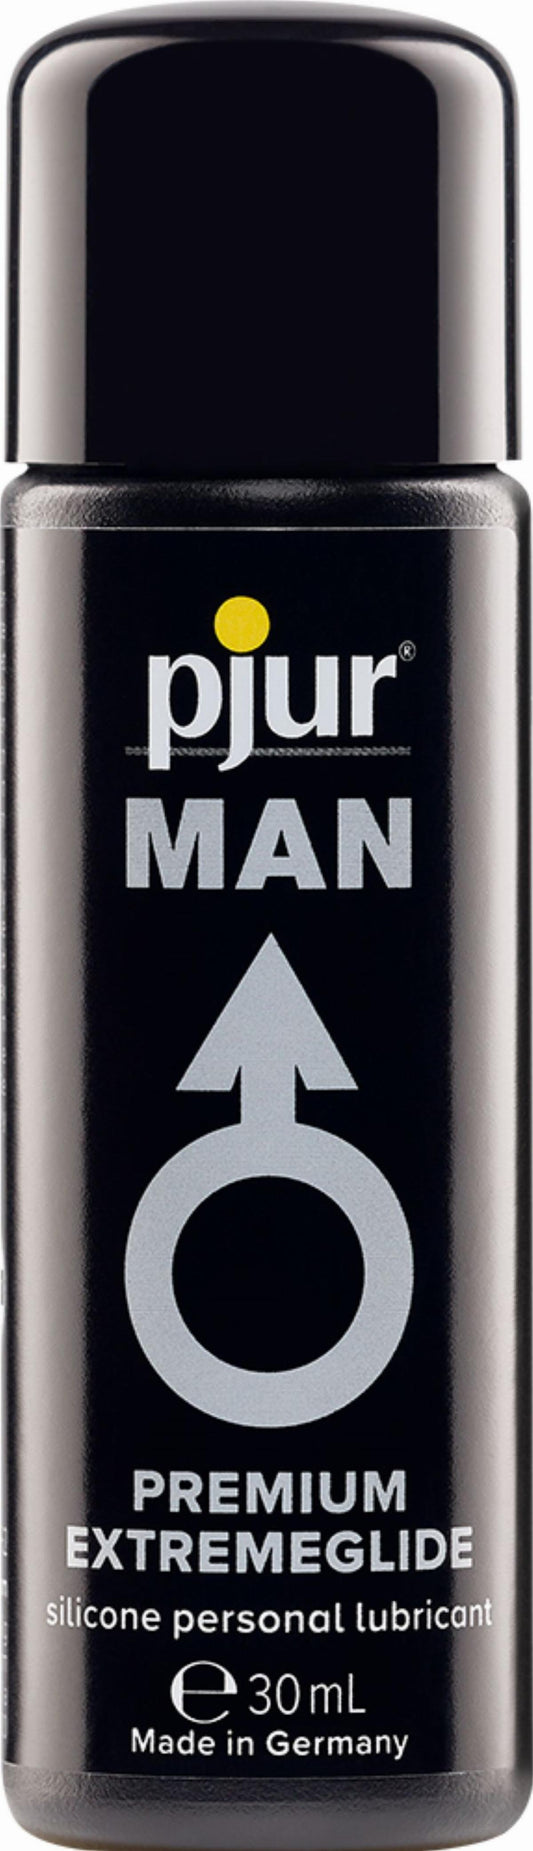 Pjur® Man Premium Extreme Glide Glijmiddel - 30ml